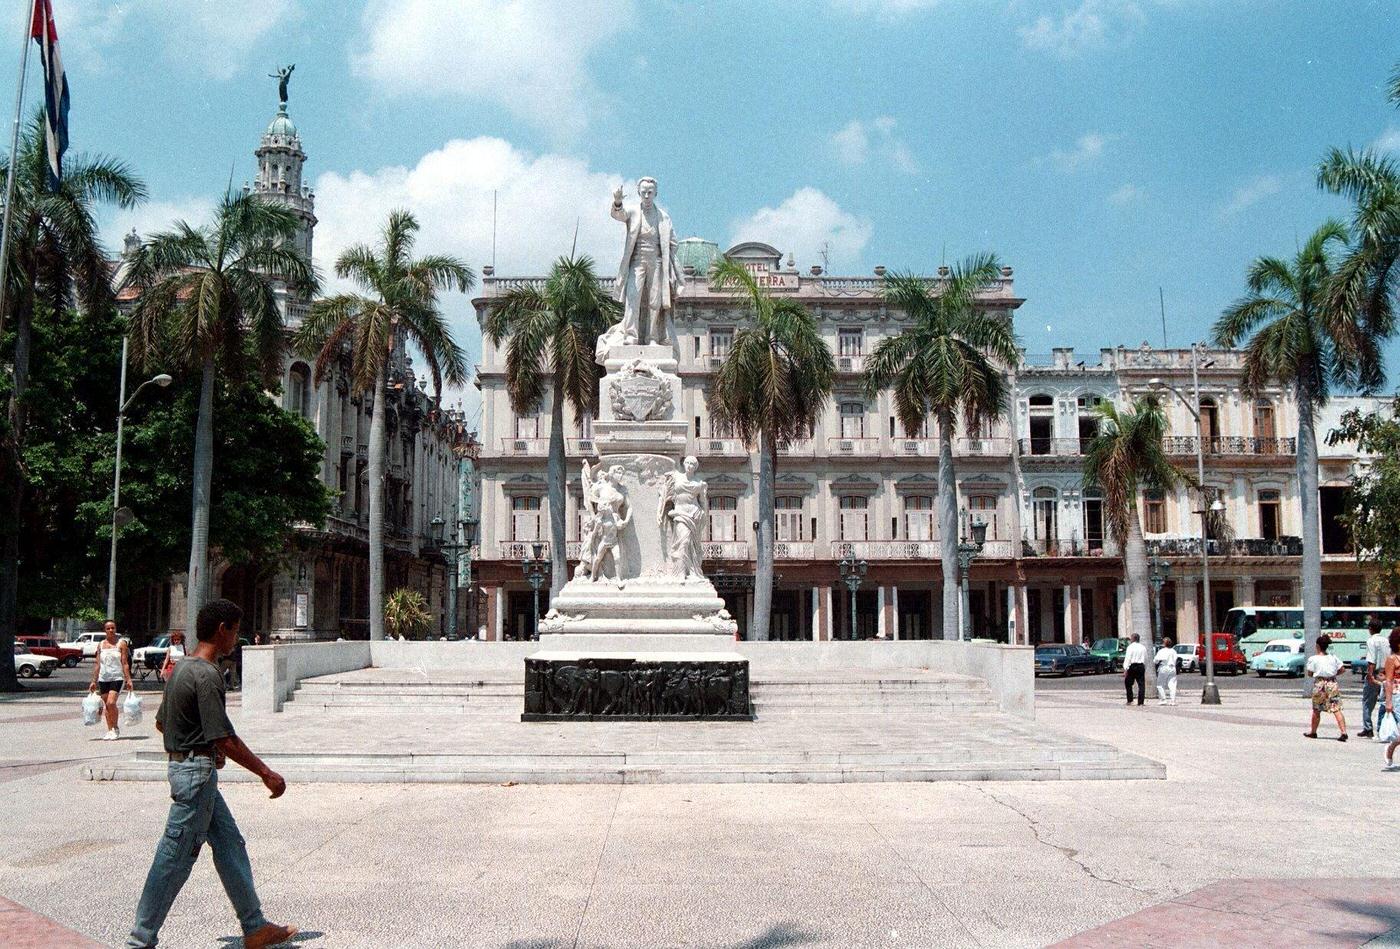 Hotel "England" in Havana, Cuba.